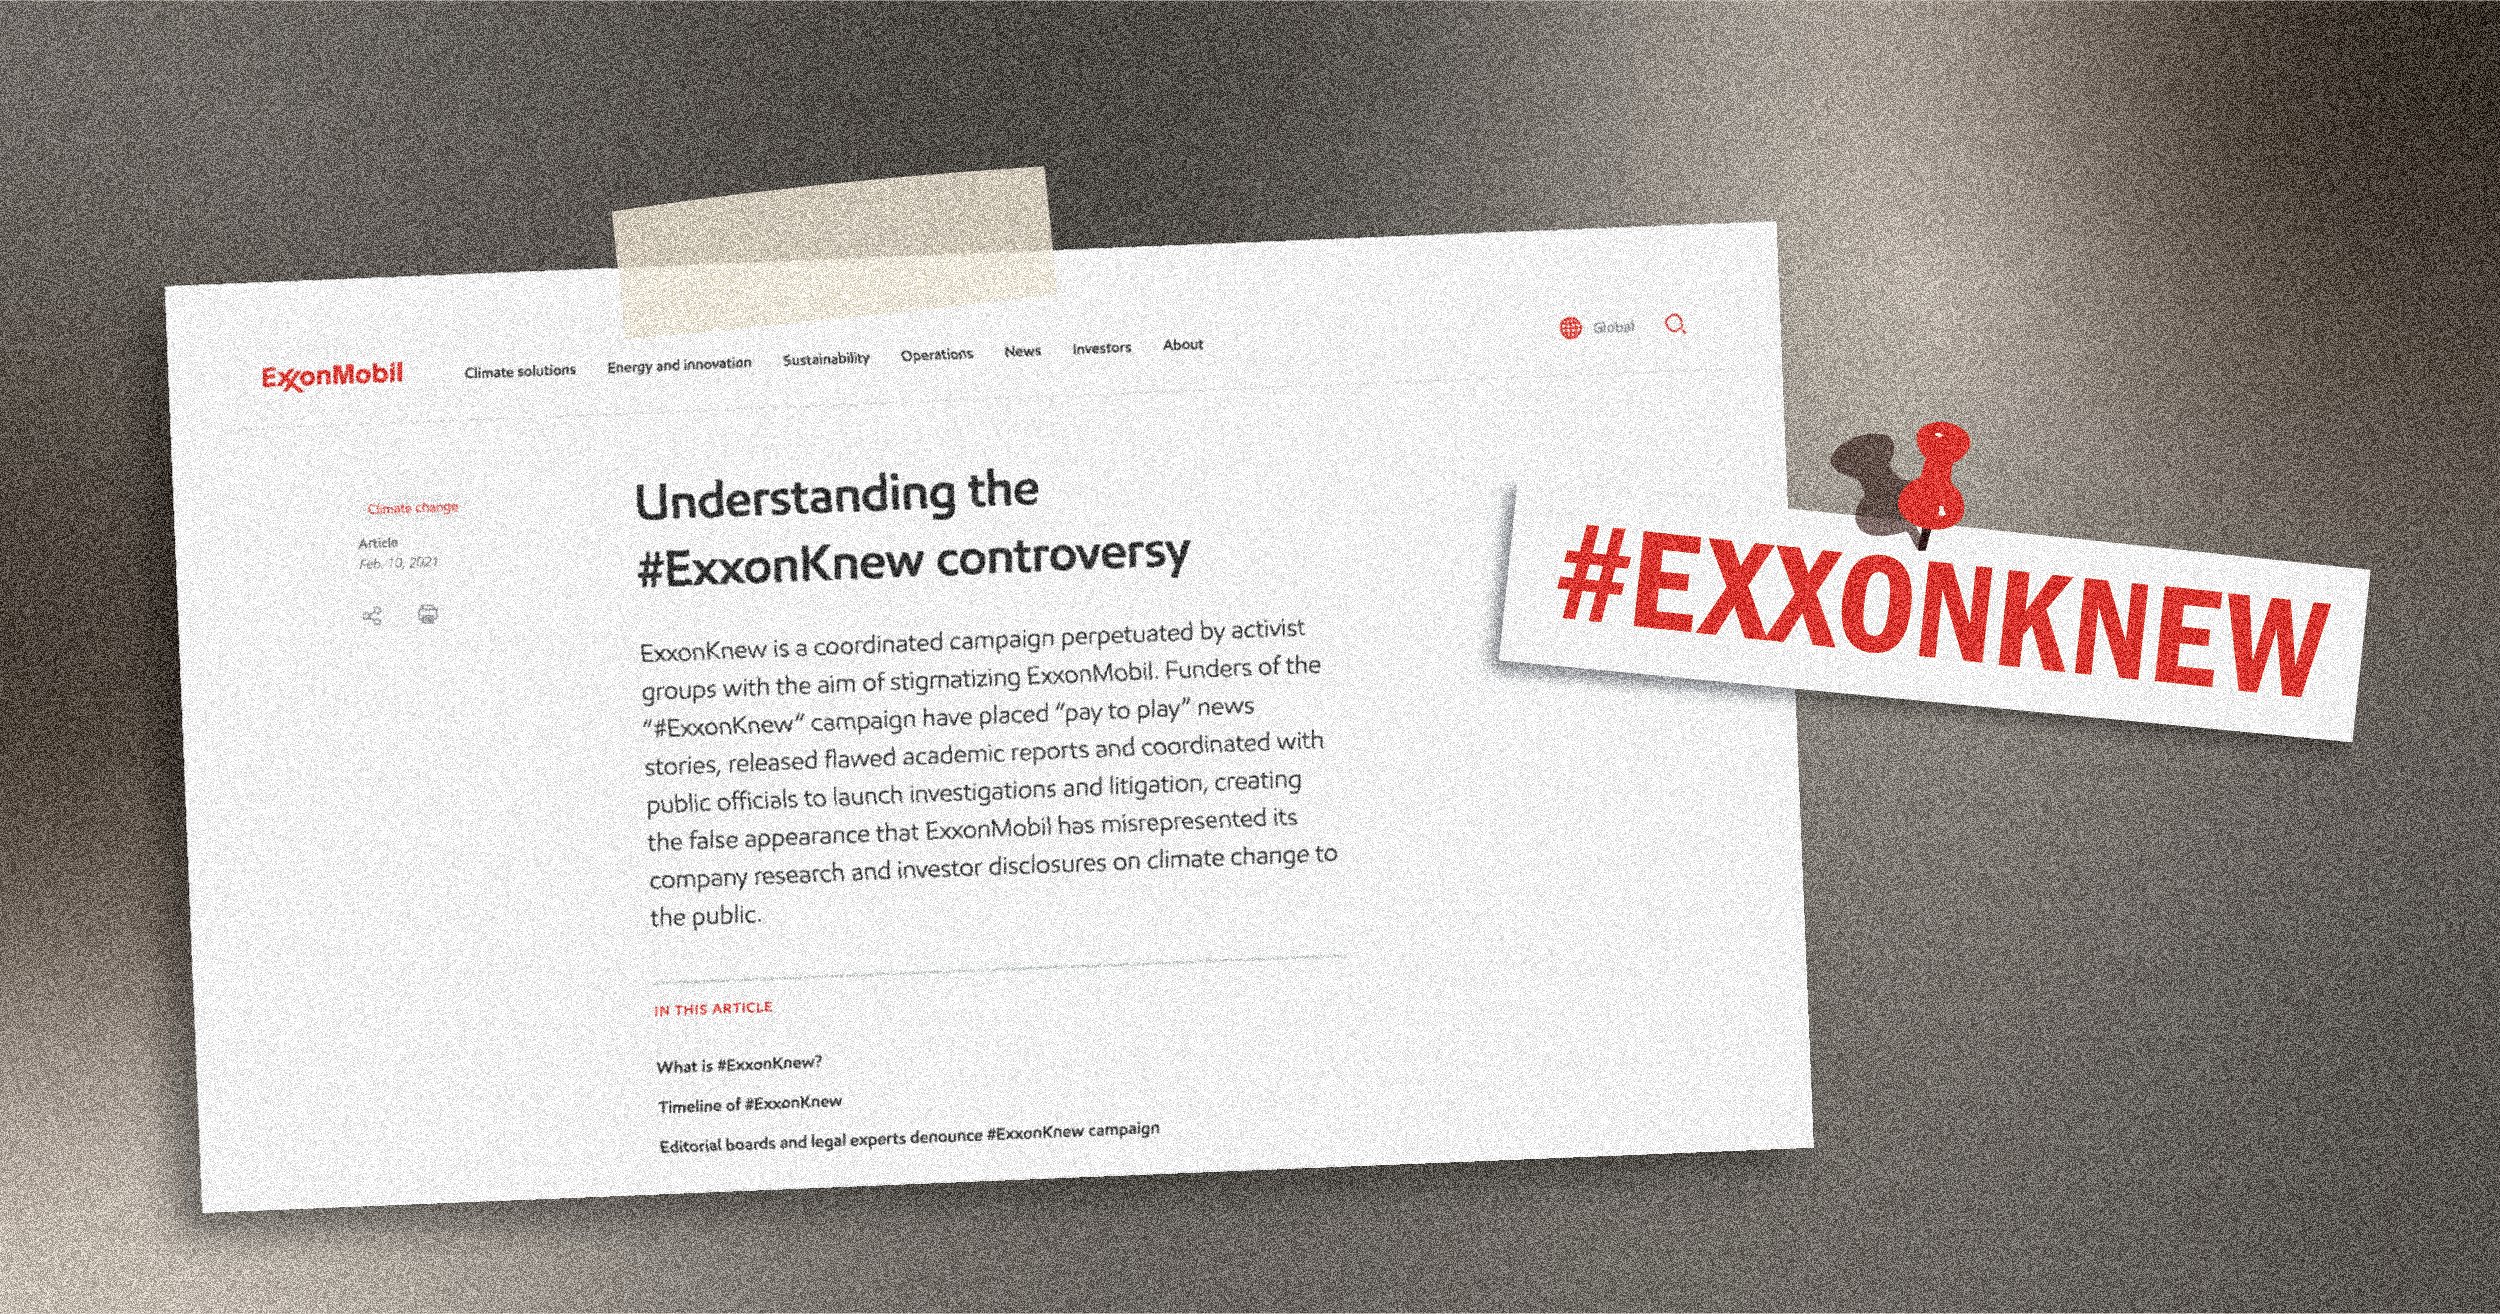 ExxonKnews: Why did Exxon take down a web page attacking its critics?